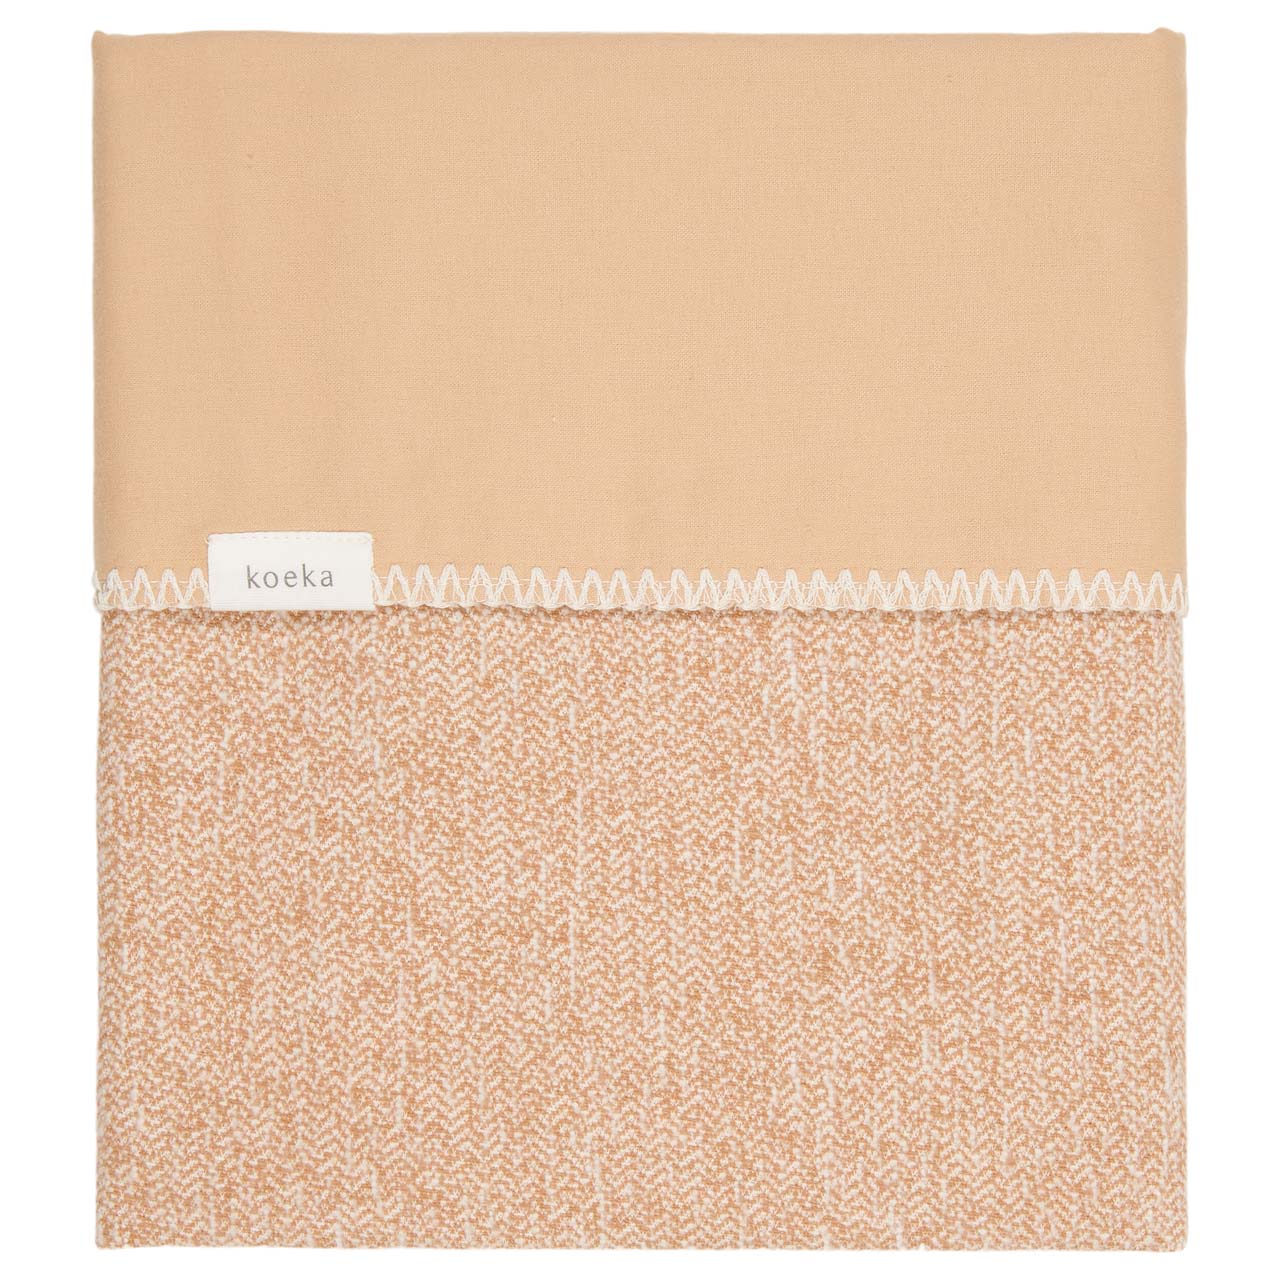 Koeka Cot Blanket Flannel Vigo - 100x150 cm.